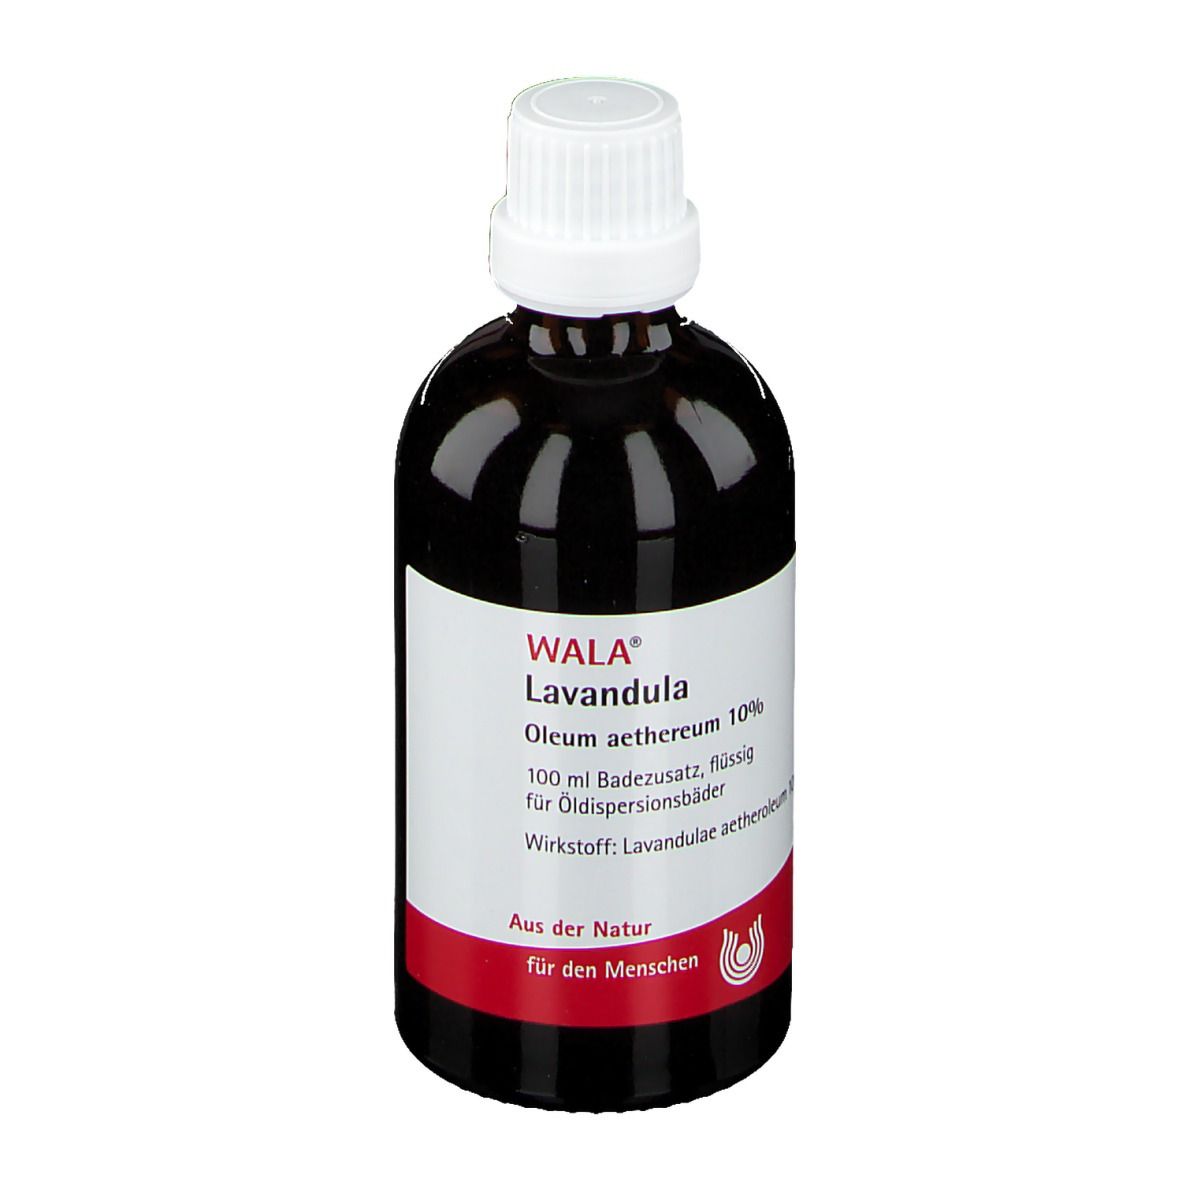 WALA® Lavandula Oleum aeth. 10%